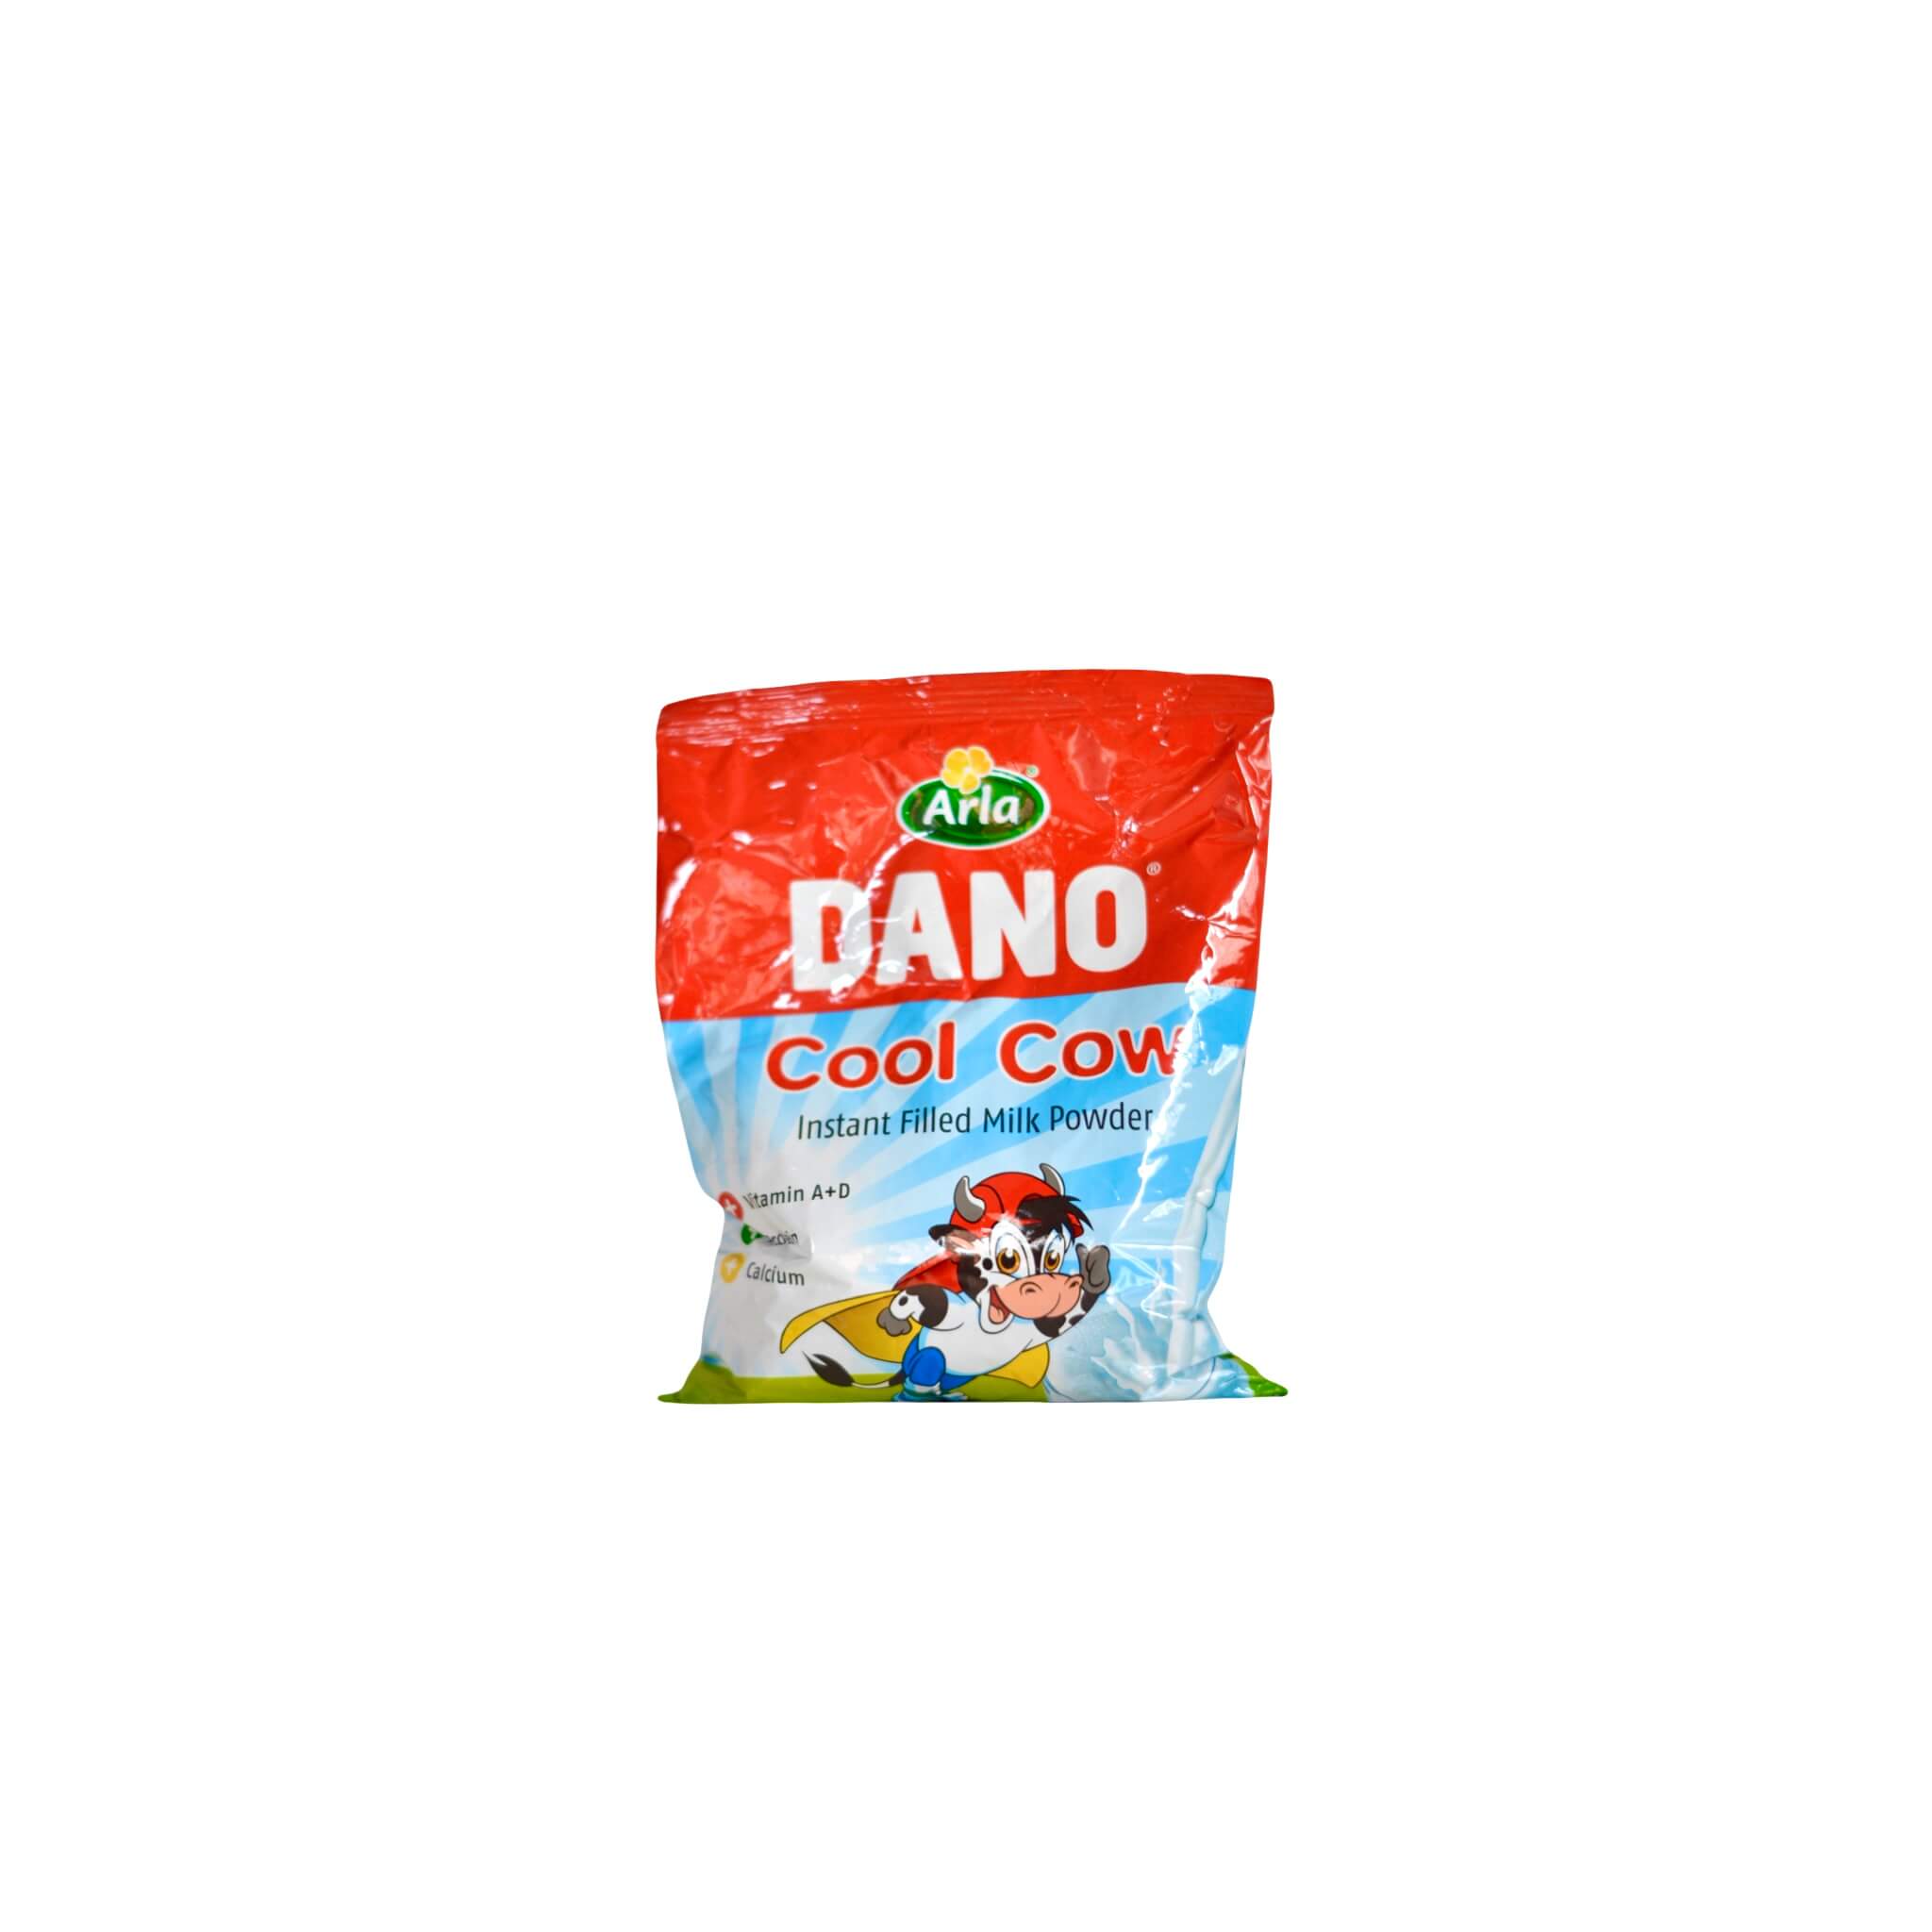 350g of Dano Cool cow milk powder